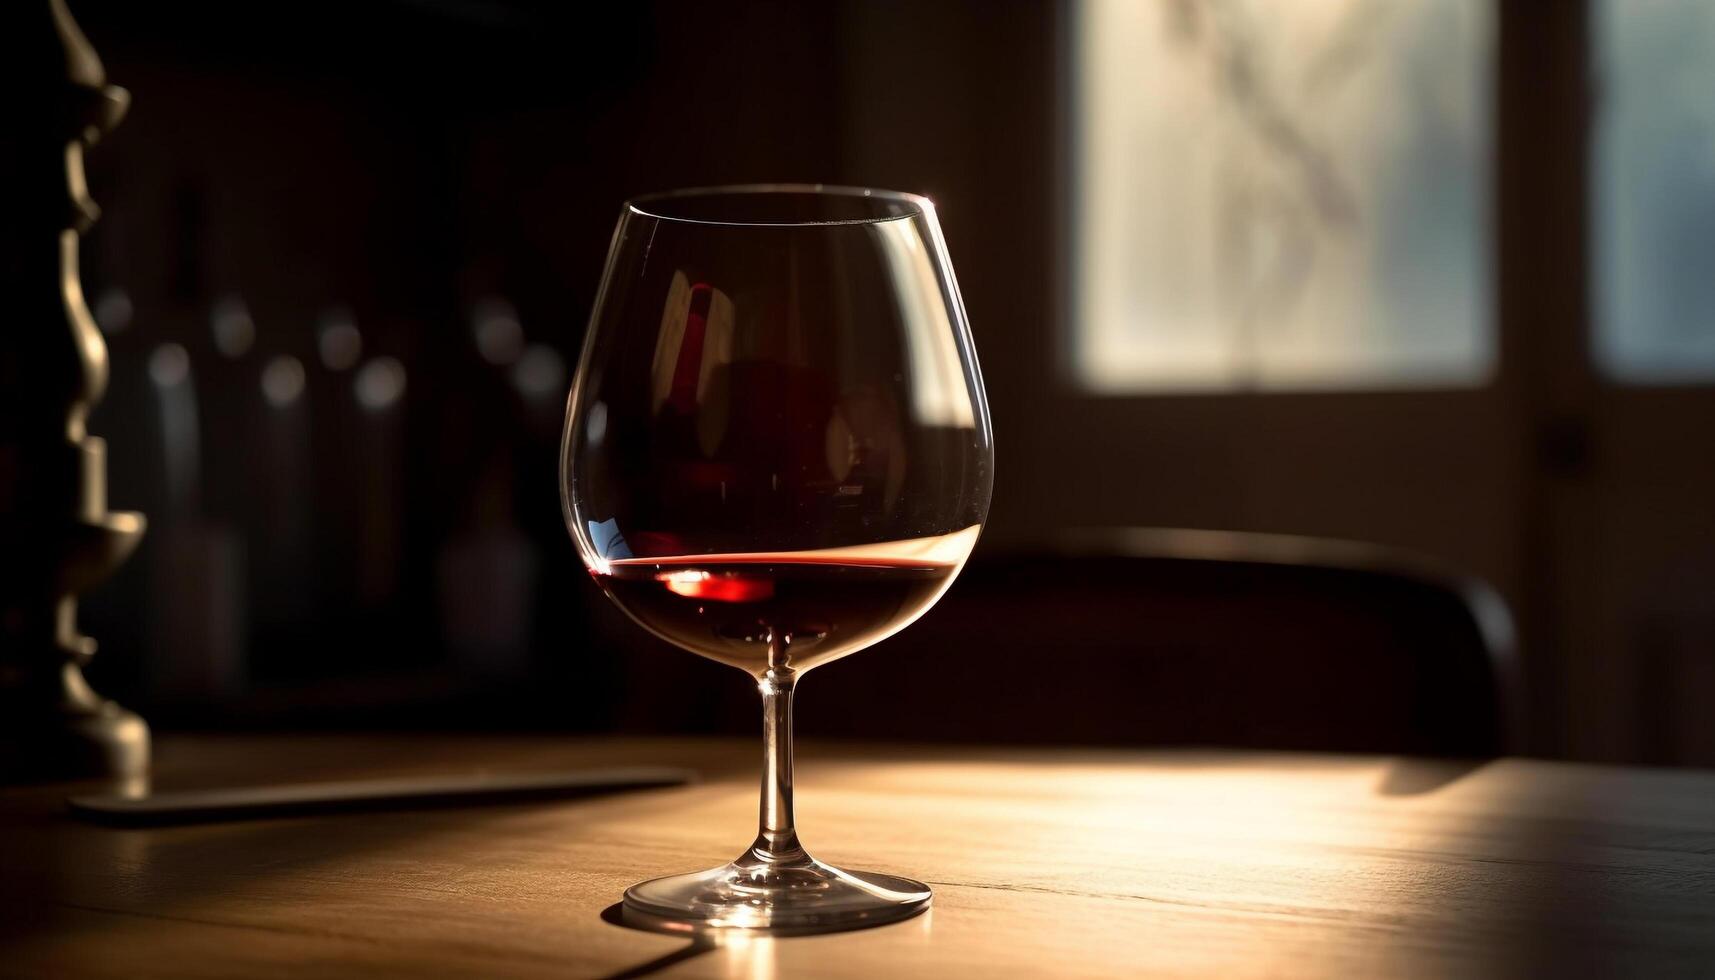 Luxury wine bottle on elegant dark wooden table generated by AI photo